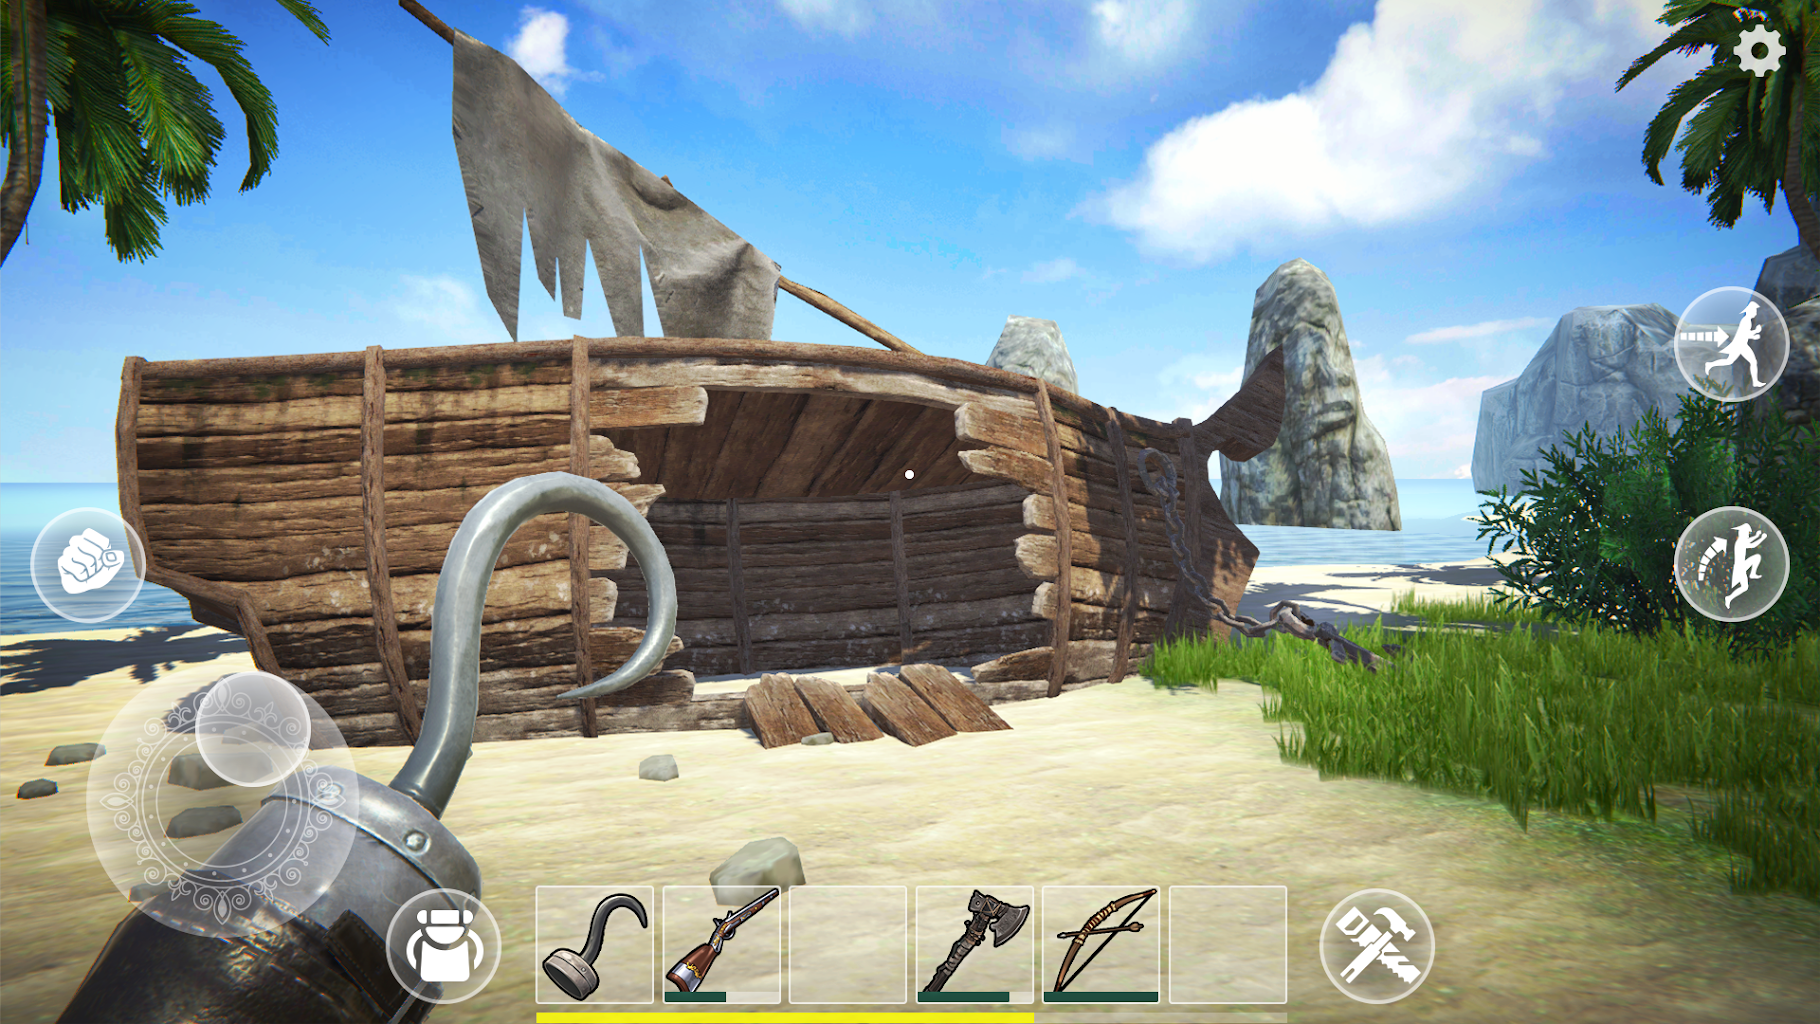 Последний пират игра. Ласт пират Исланд сурвайвал андроид. Остров выживания Survival Android игра.